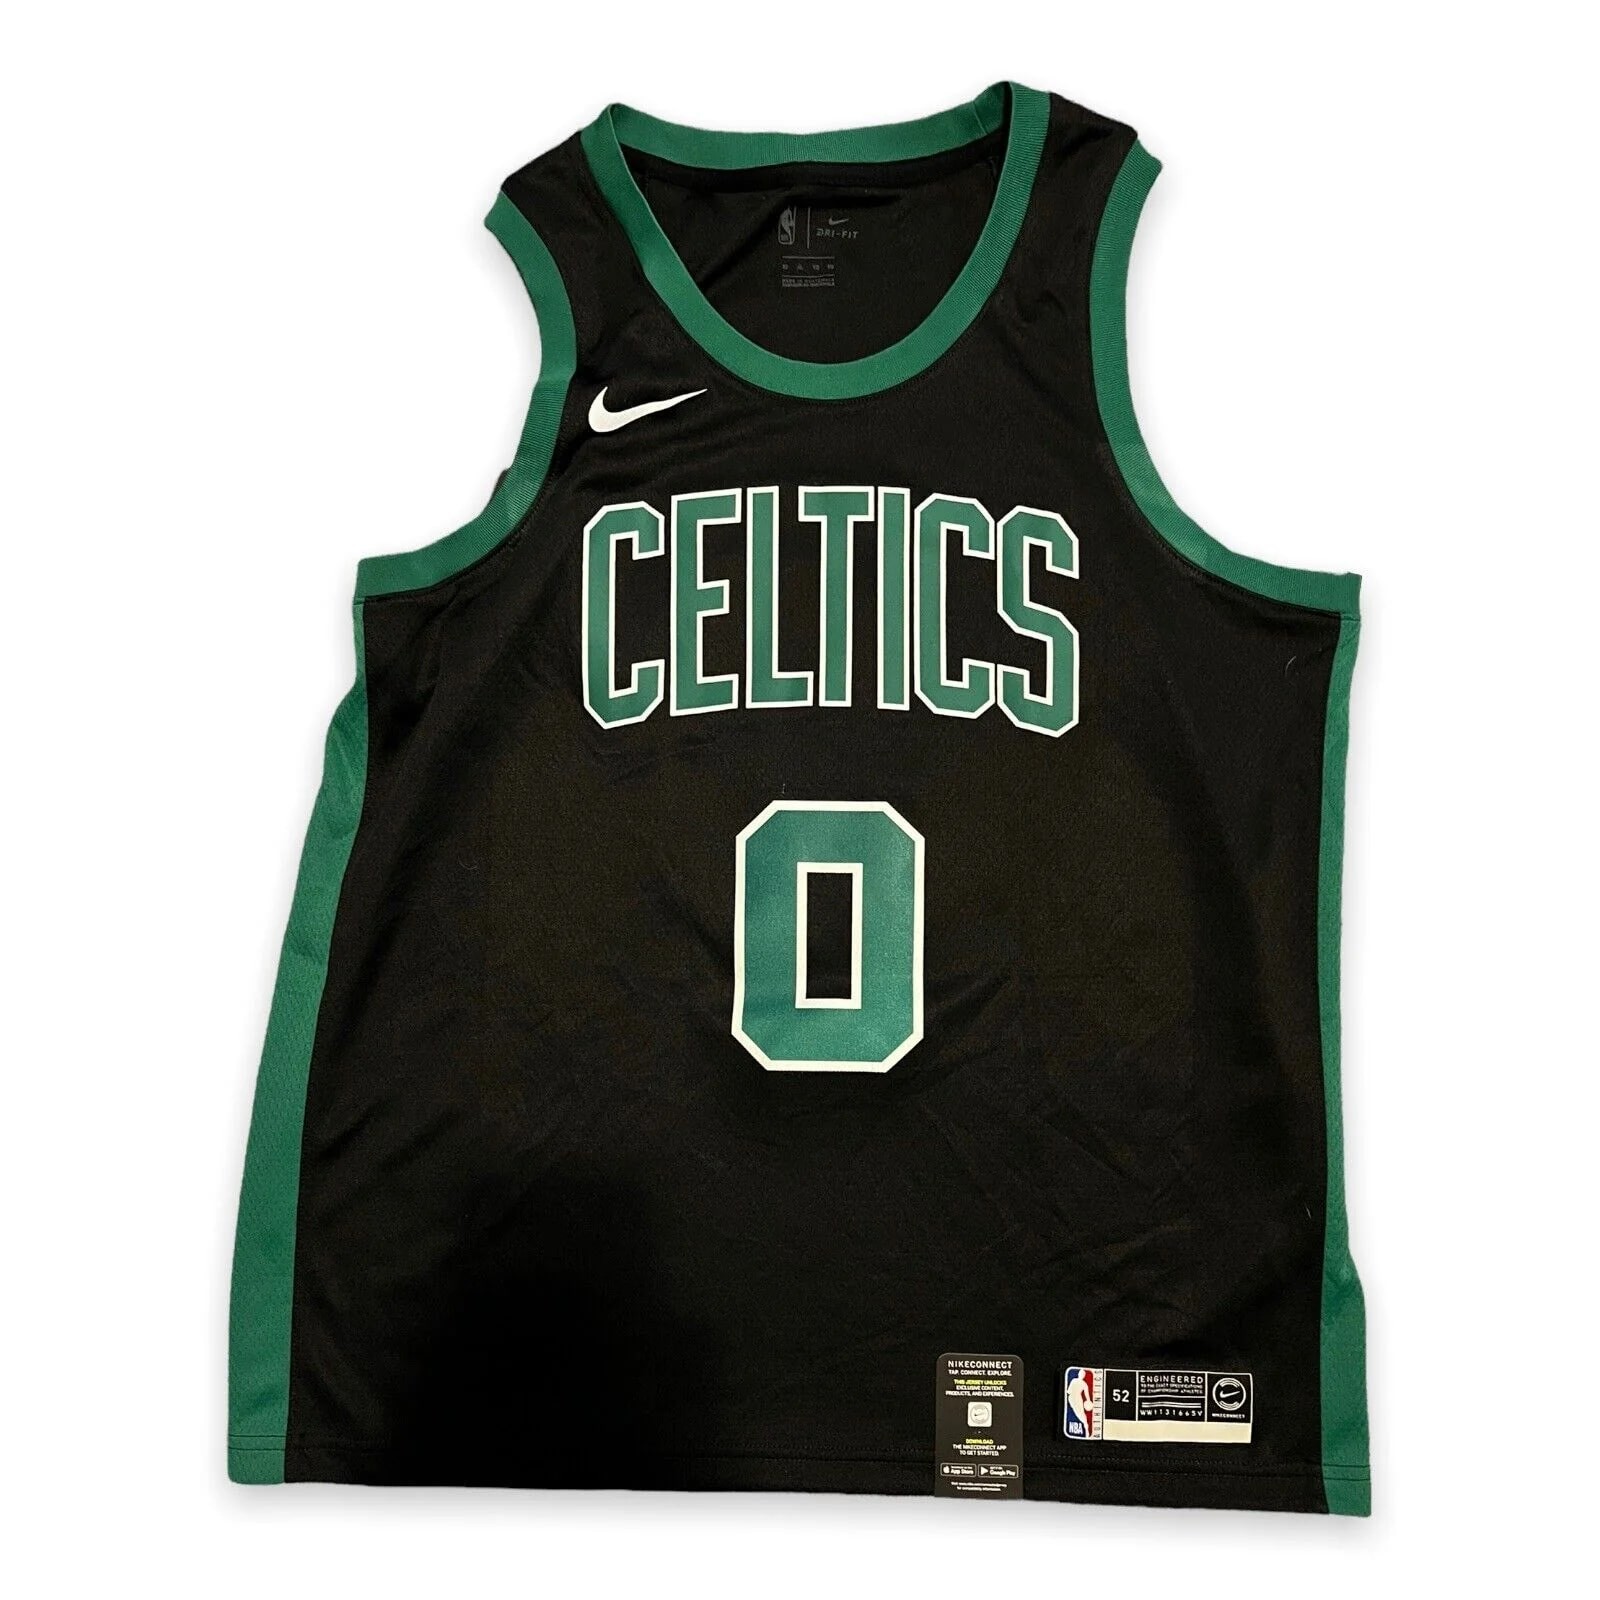 Shaquille O'Neal Autographed Celtics Jersey - Boston Celtics History